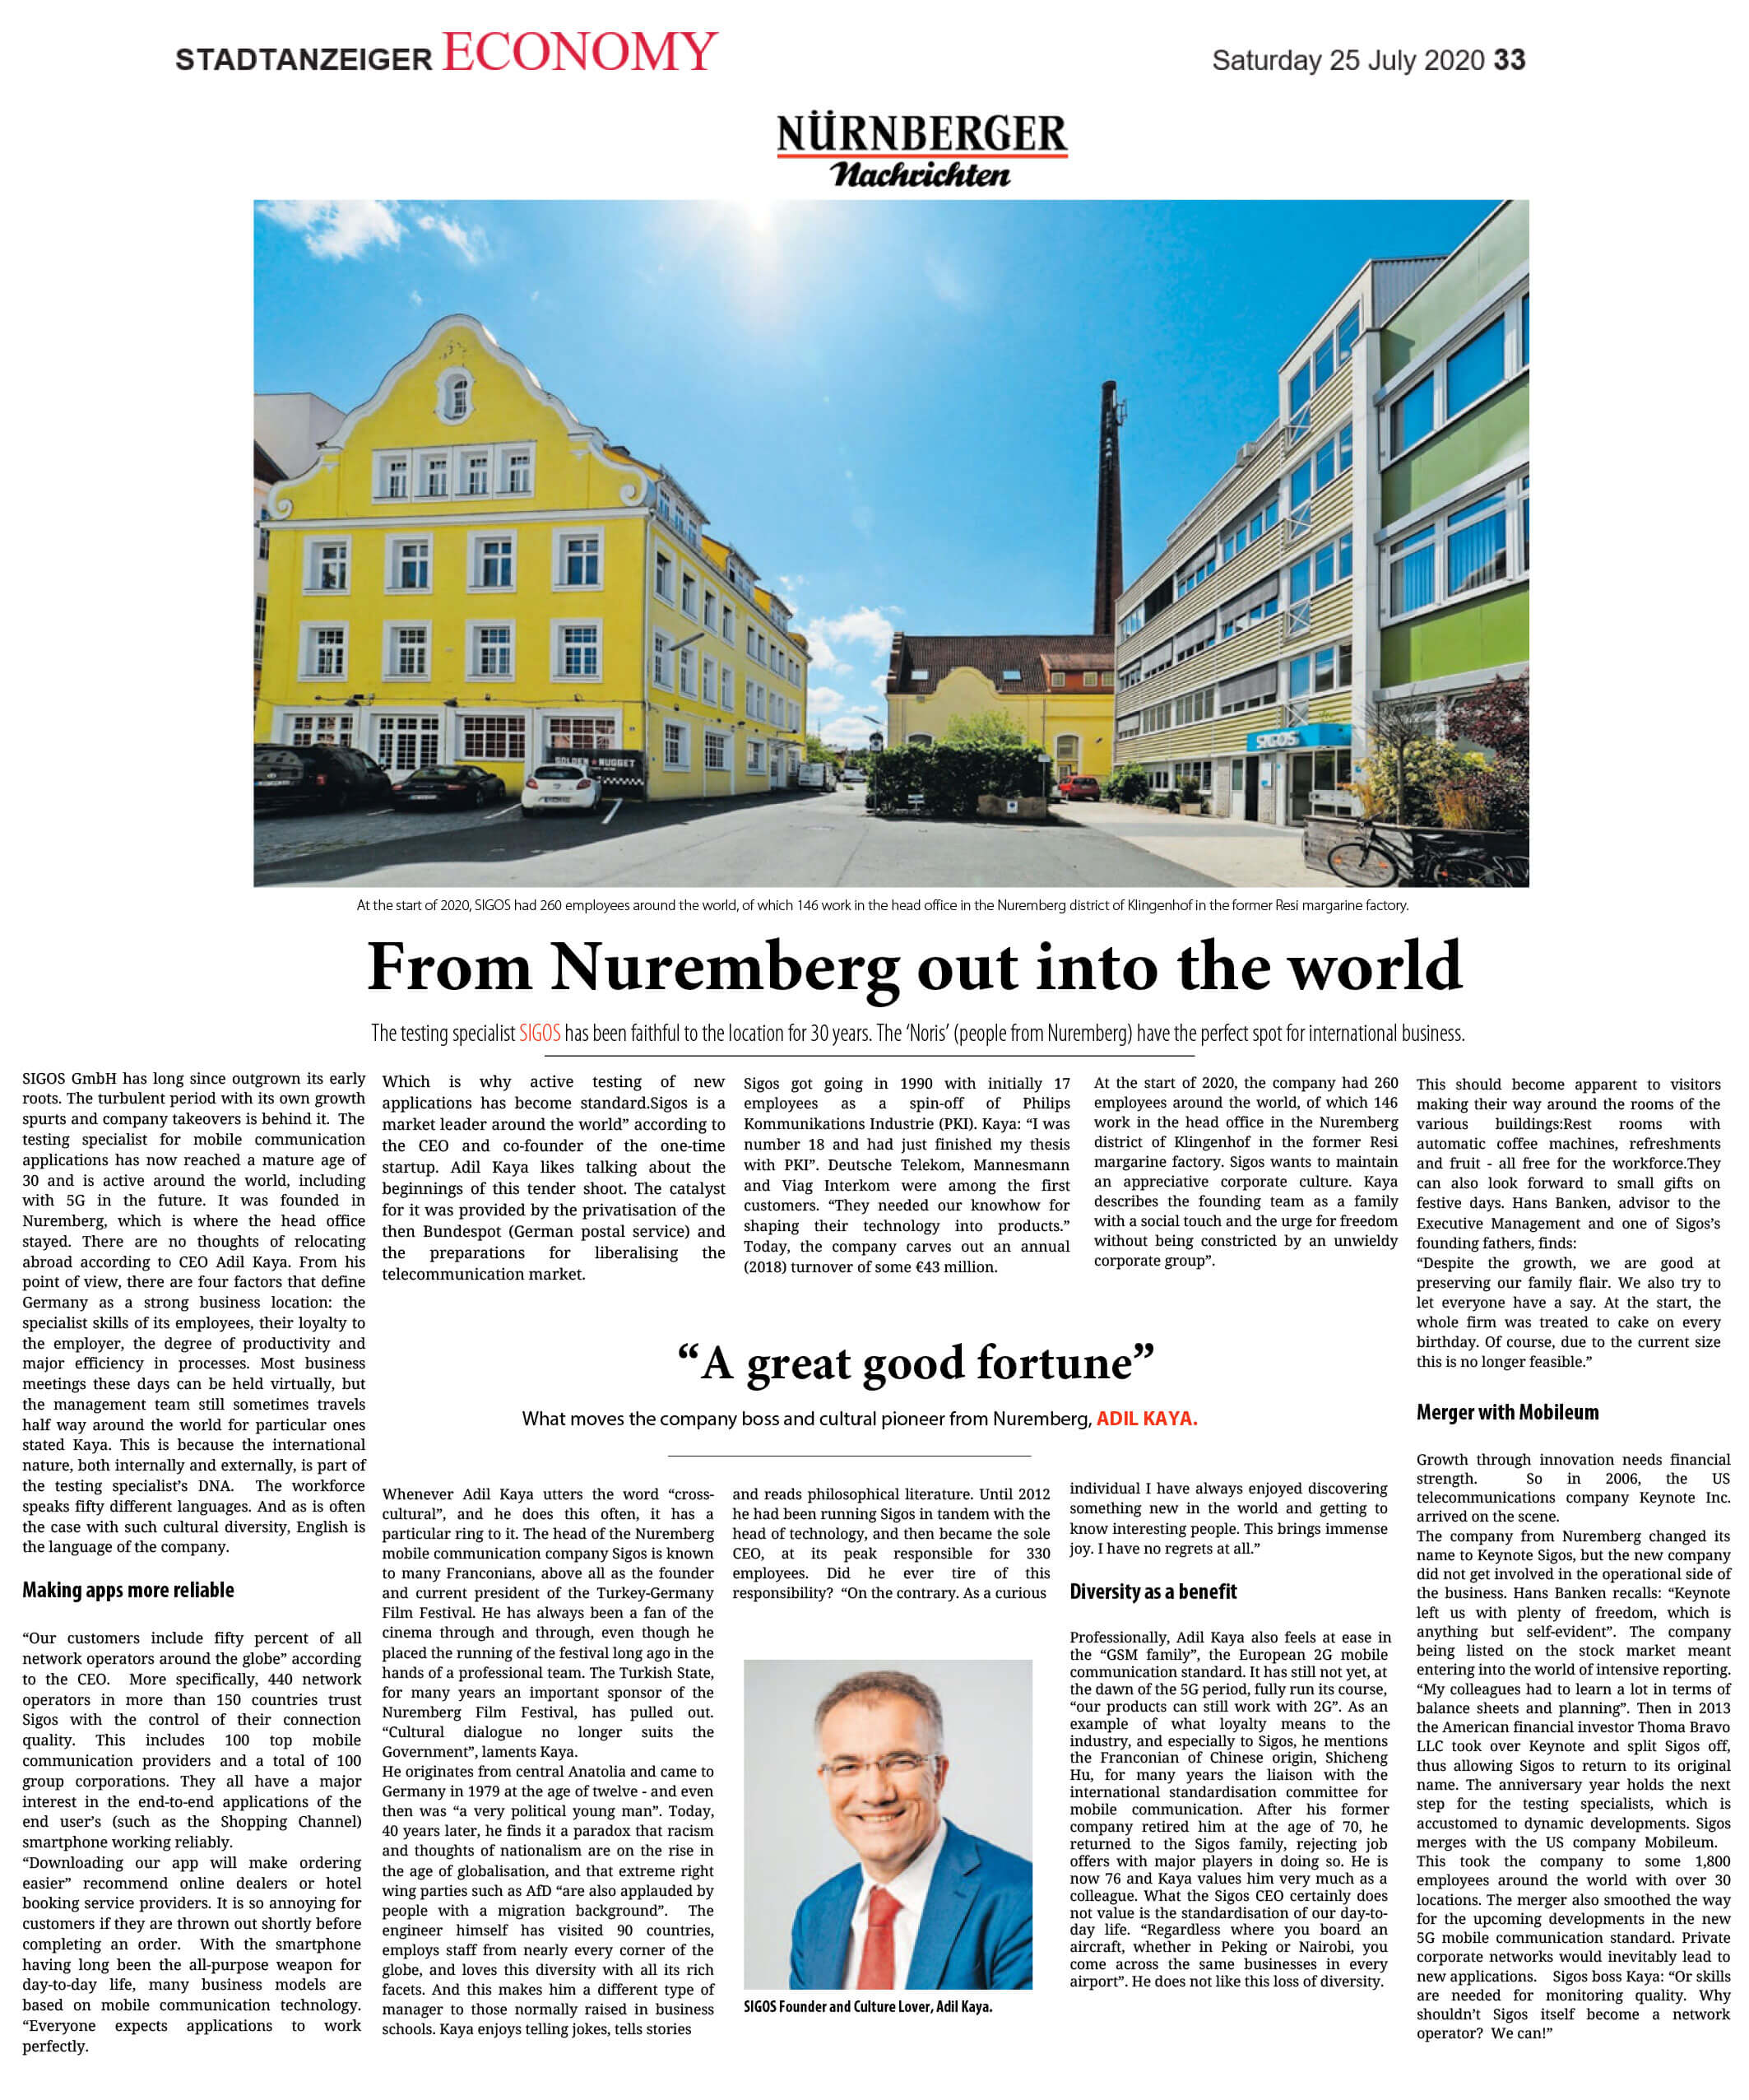 Newspaper Nuernberger Nachrichten SIGOS Adil Kaya From Nuremberg out into the world - Diversity as a benefıt - 25-07-2020